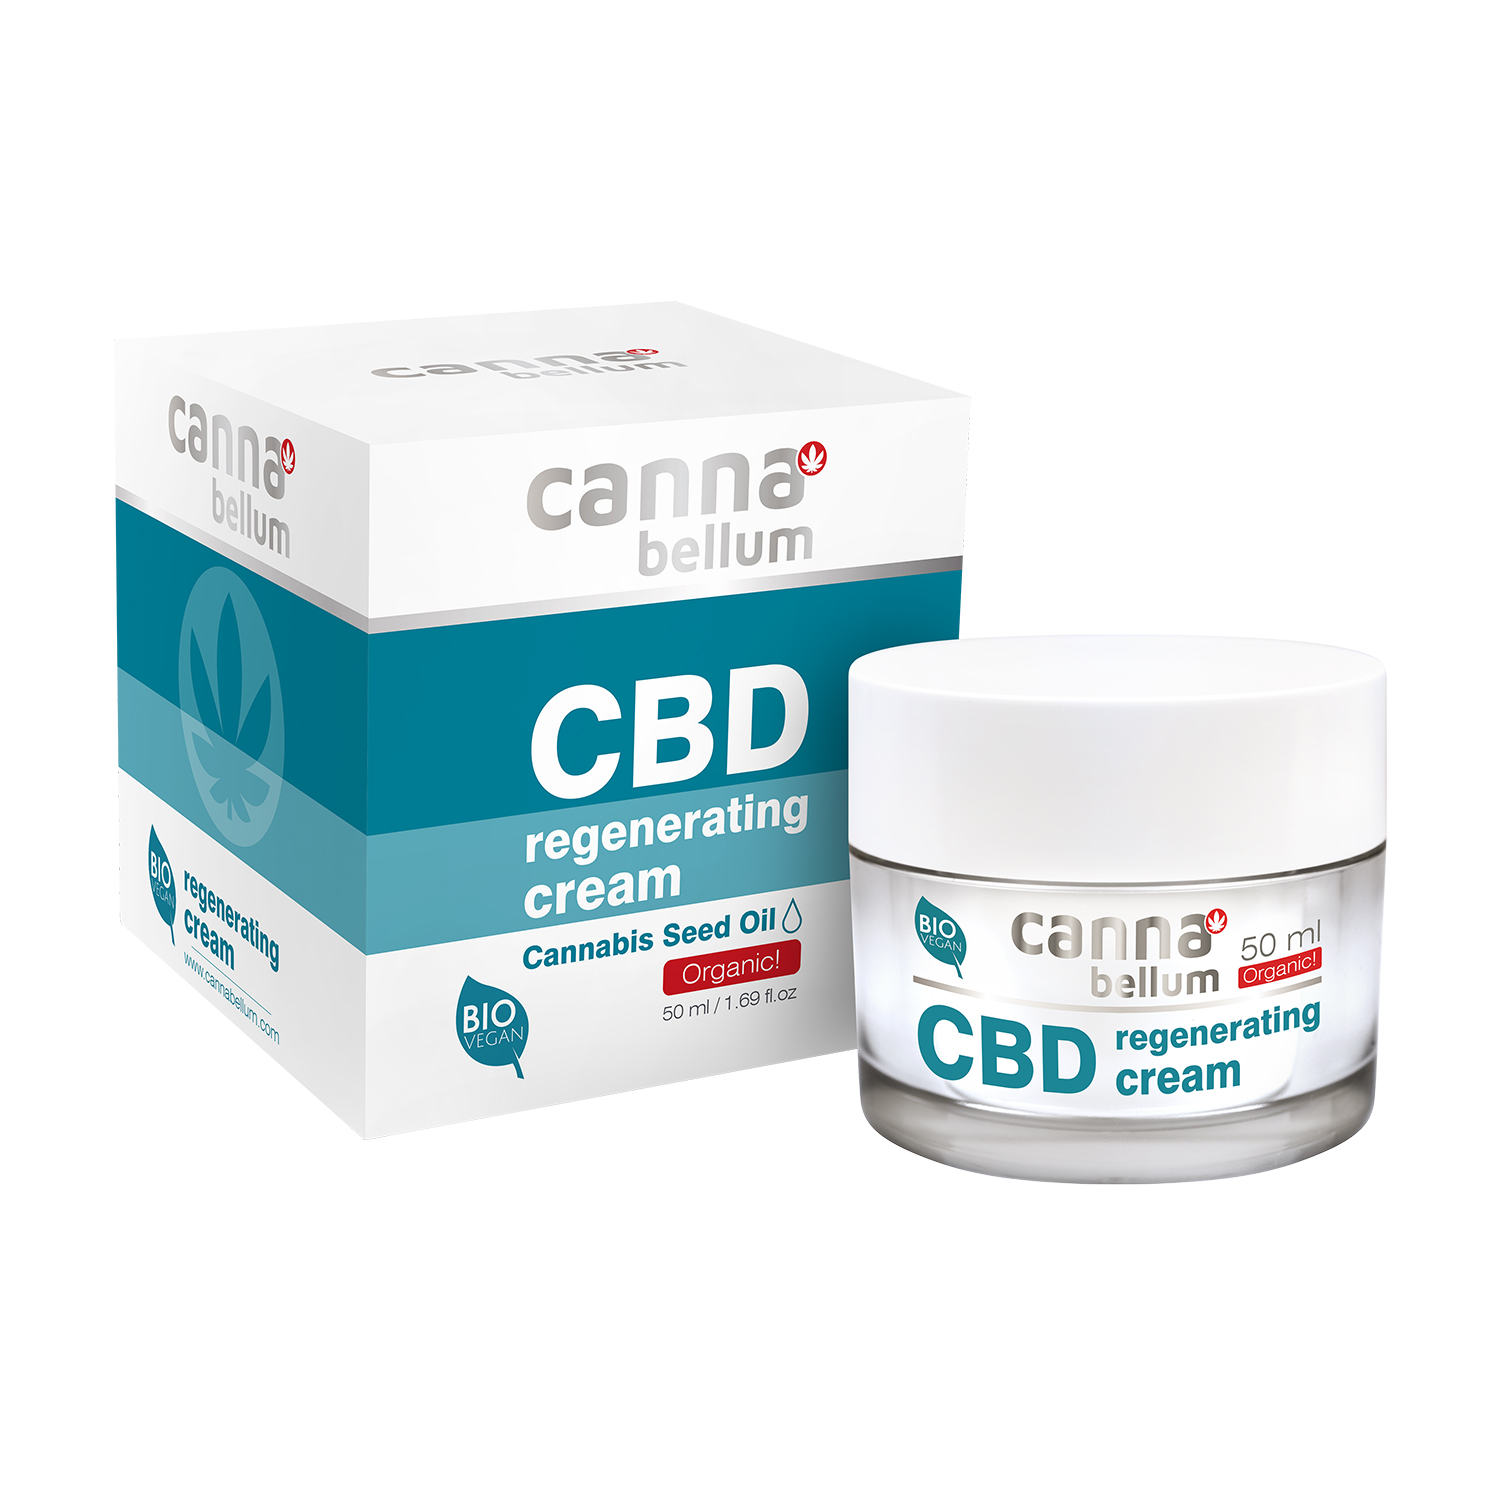 Cannabellum CBD regenerating cream 50ml P1253 komplet WEB 107